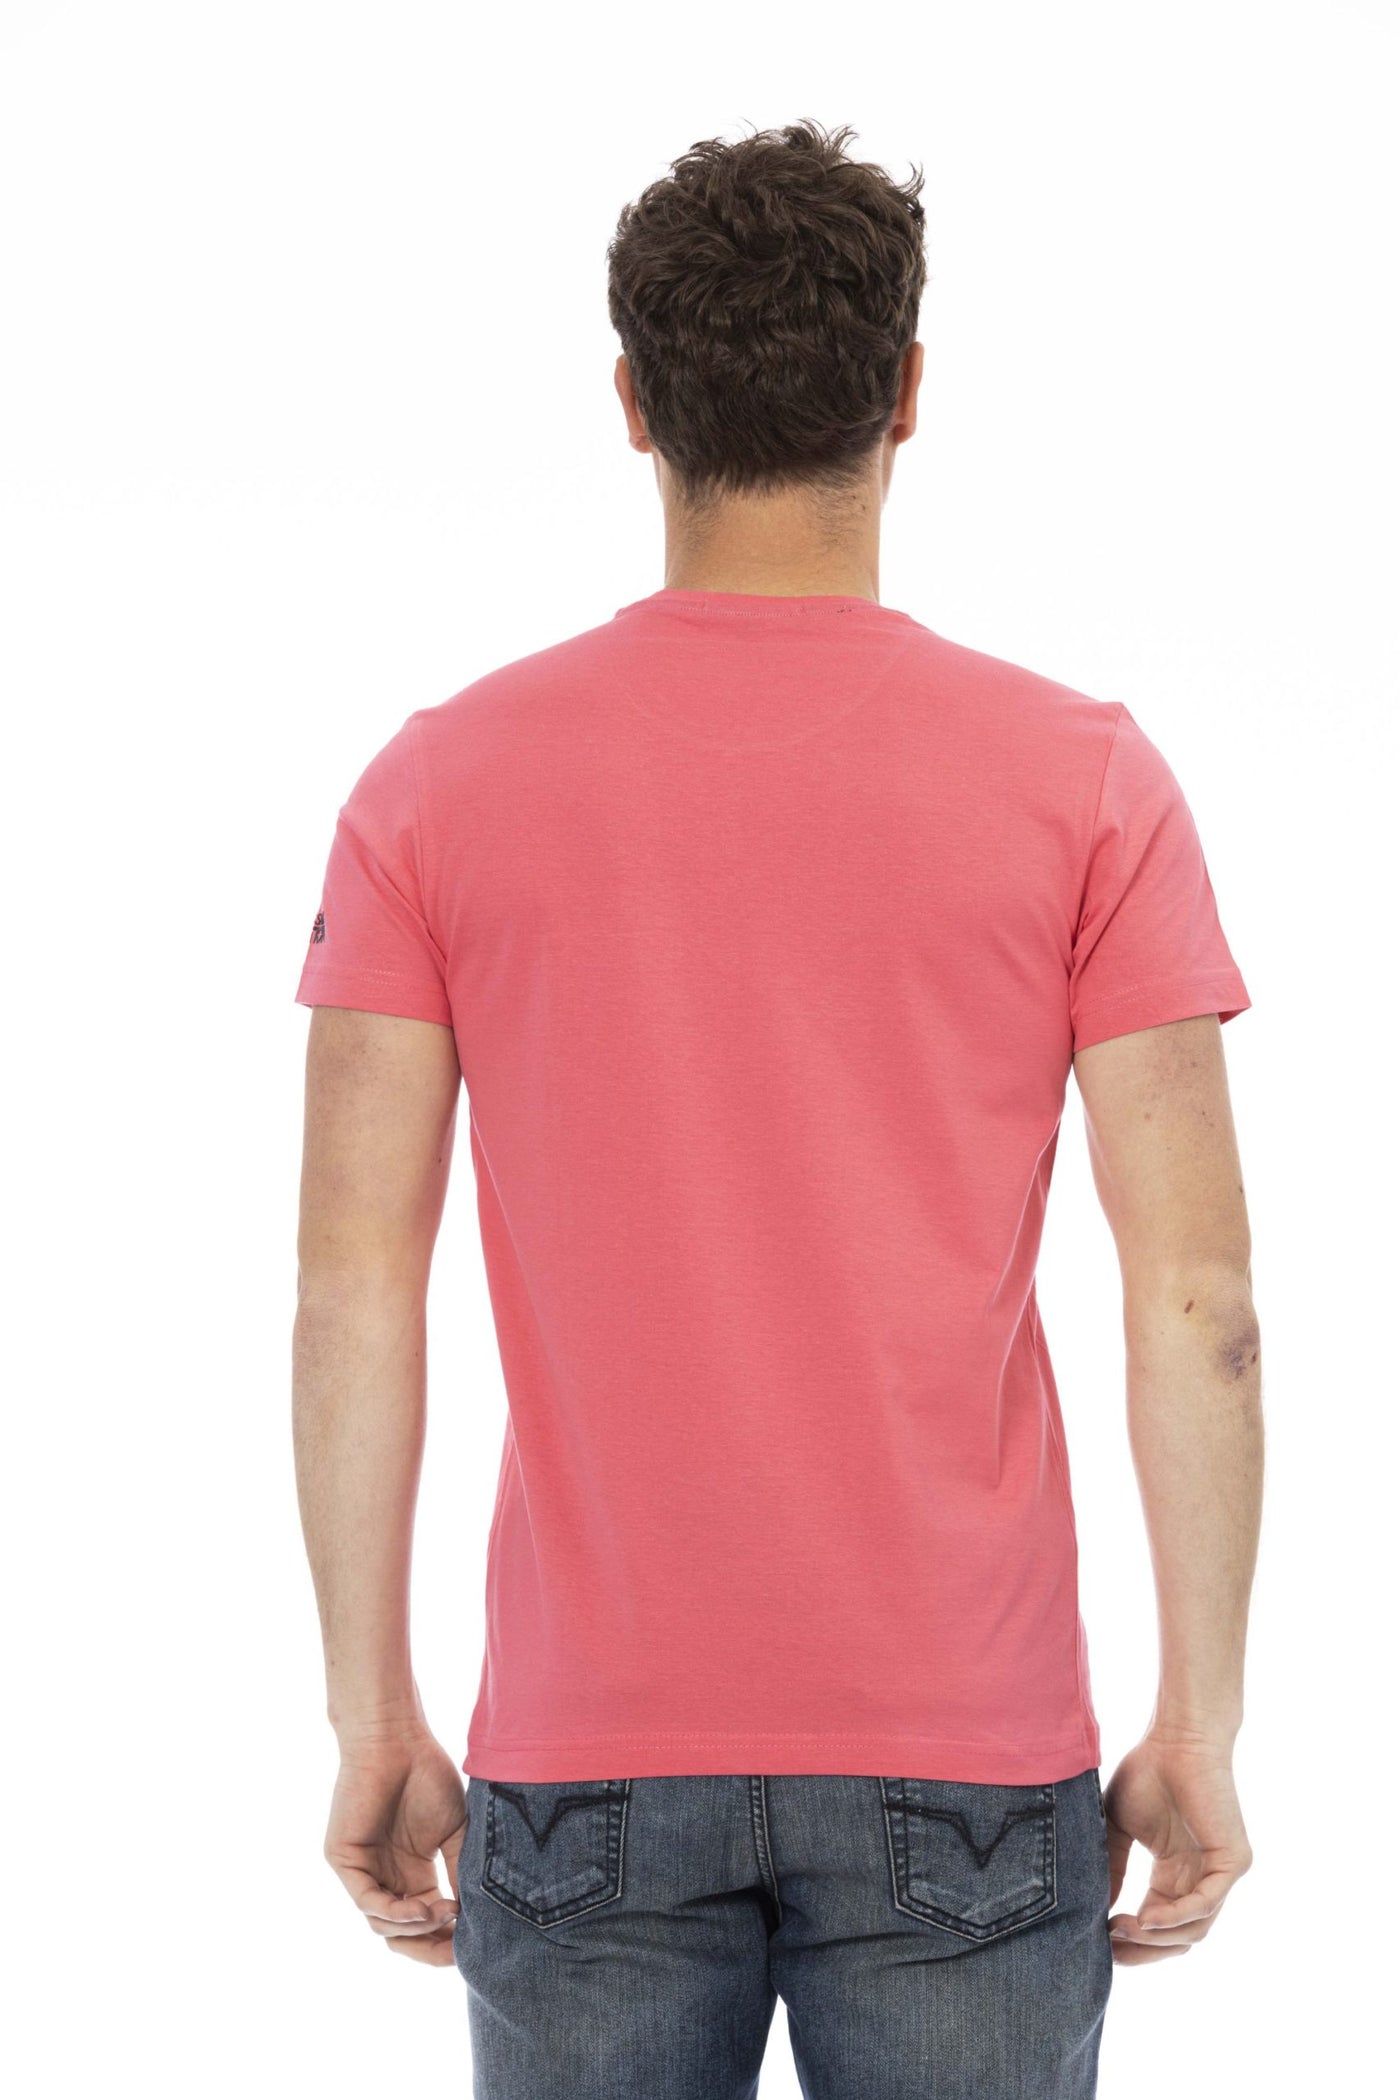 Trussardi Action Pink Cotton T-Shirt